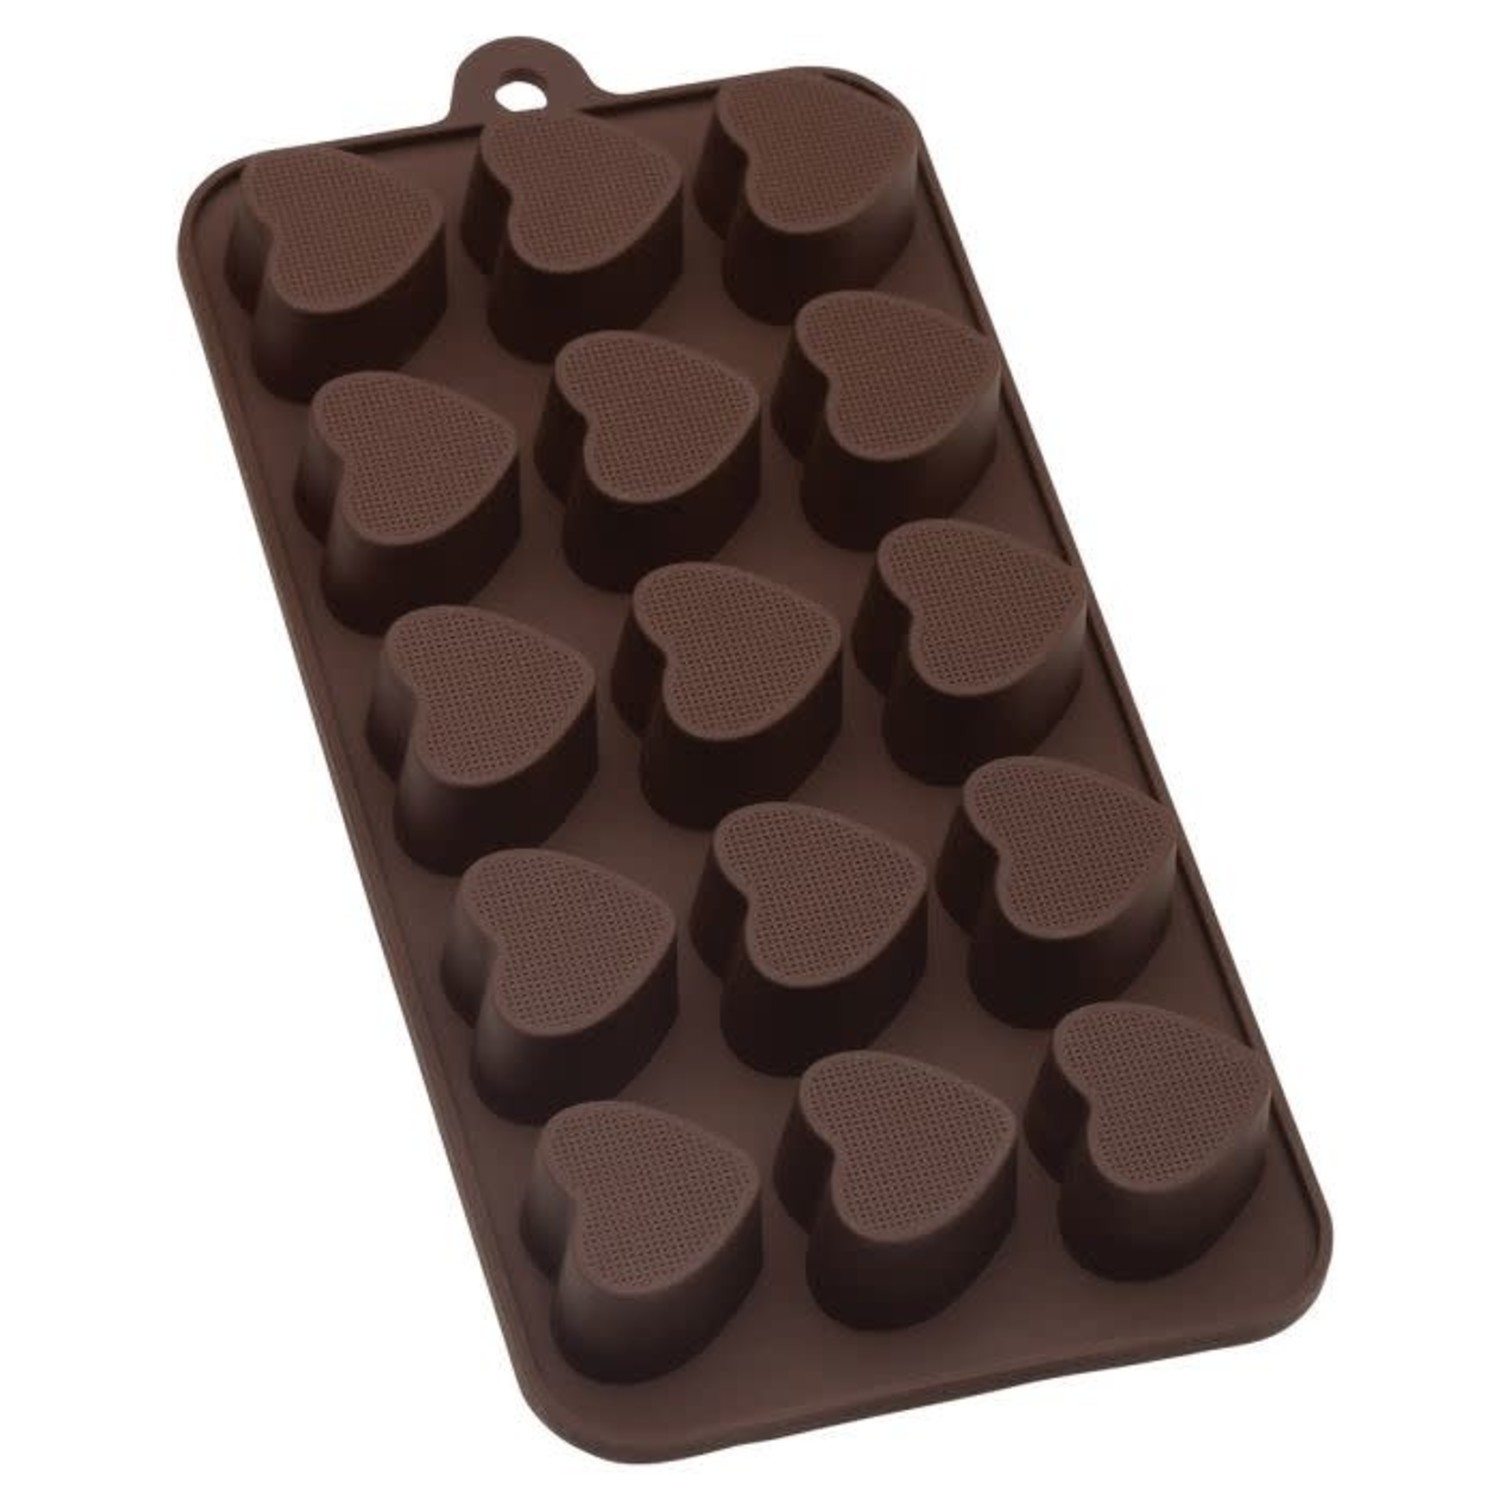 https://cdn.shoplightspeed.com/shops/633447/files/33736317/1500x4000x3/silicone-heart-chocolate-mold.jpg